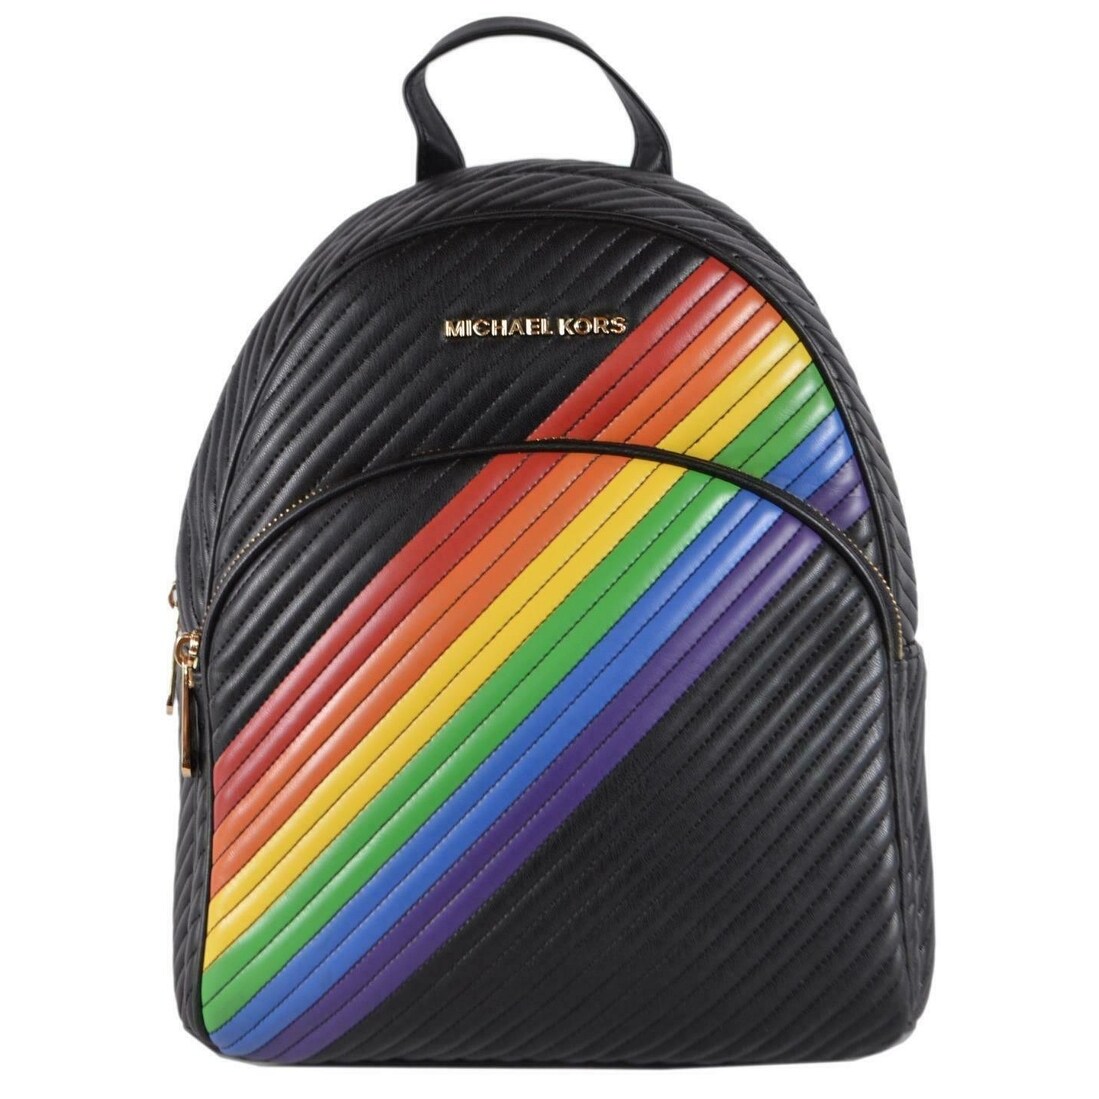 michael kors rainbow purse